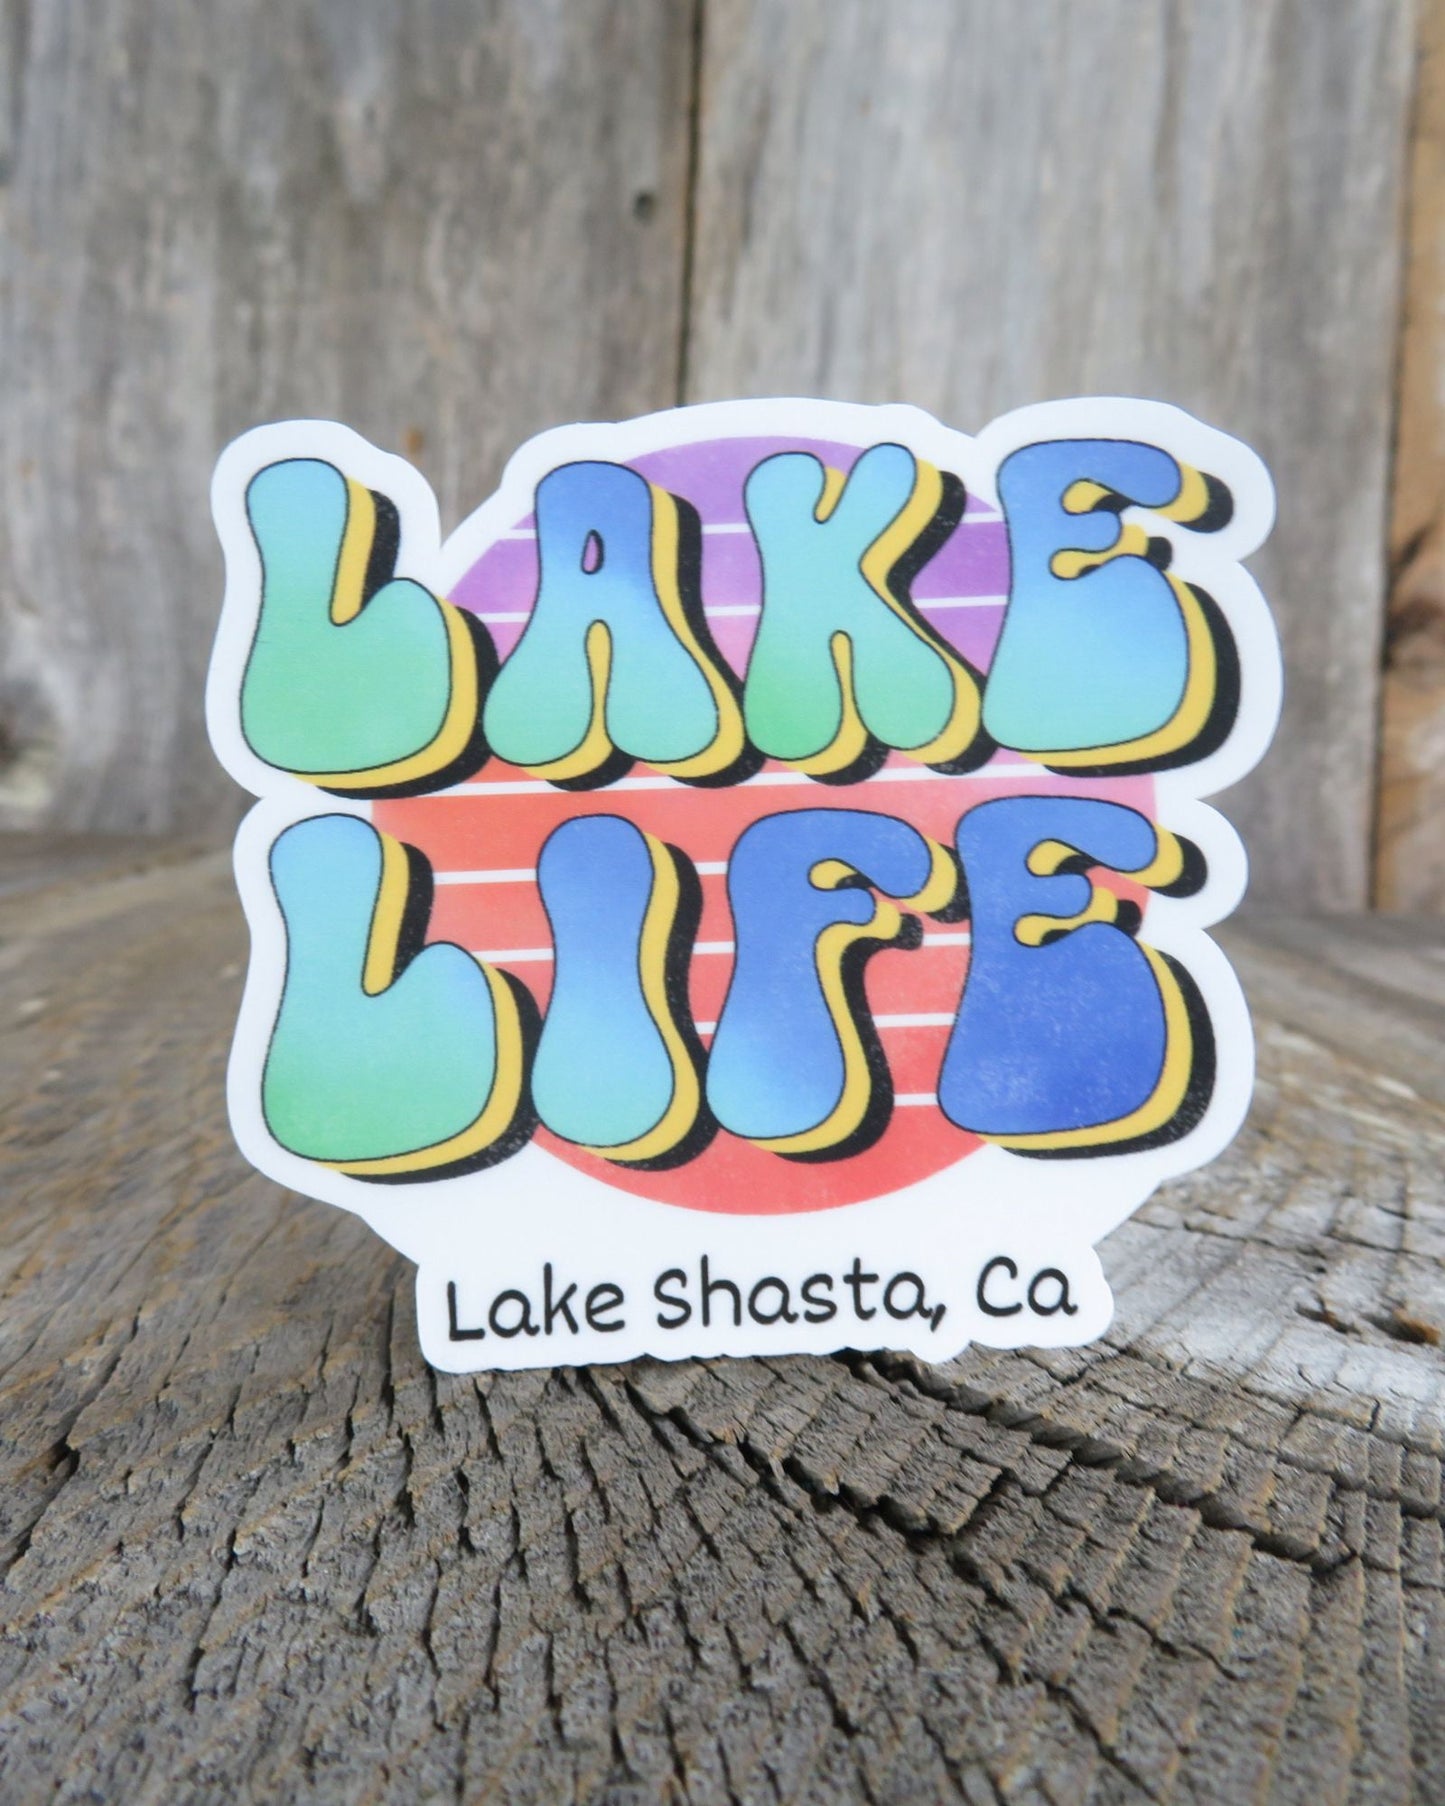 Lake Shasta Lake Life Sticker California Waterproof Camping Outdoors Souvenir